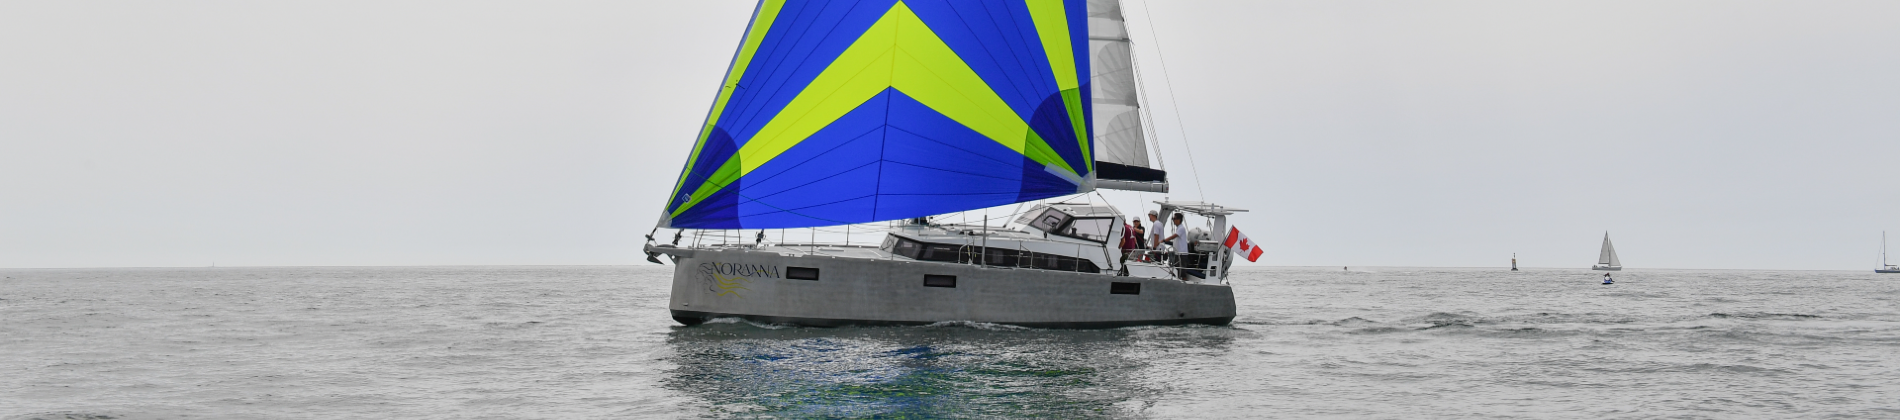 aluminium lifting keel sailing yachts for sale